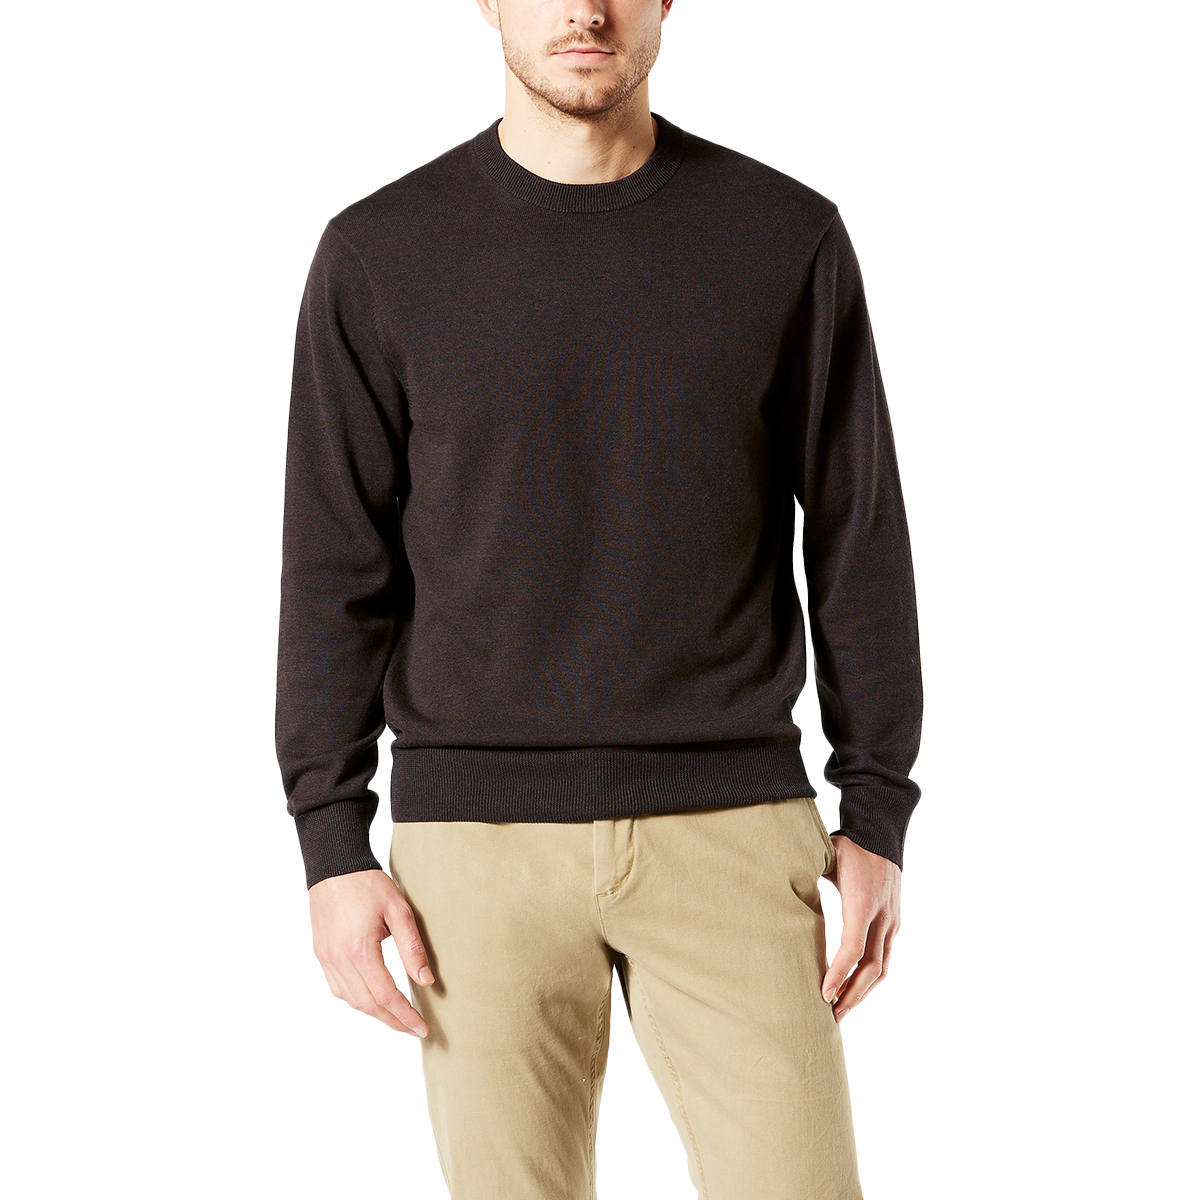 Dockers Men's Cotton Crewneck Long-Sleeve Sweater - Brown, XL